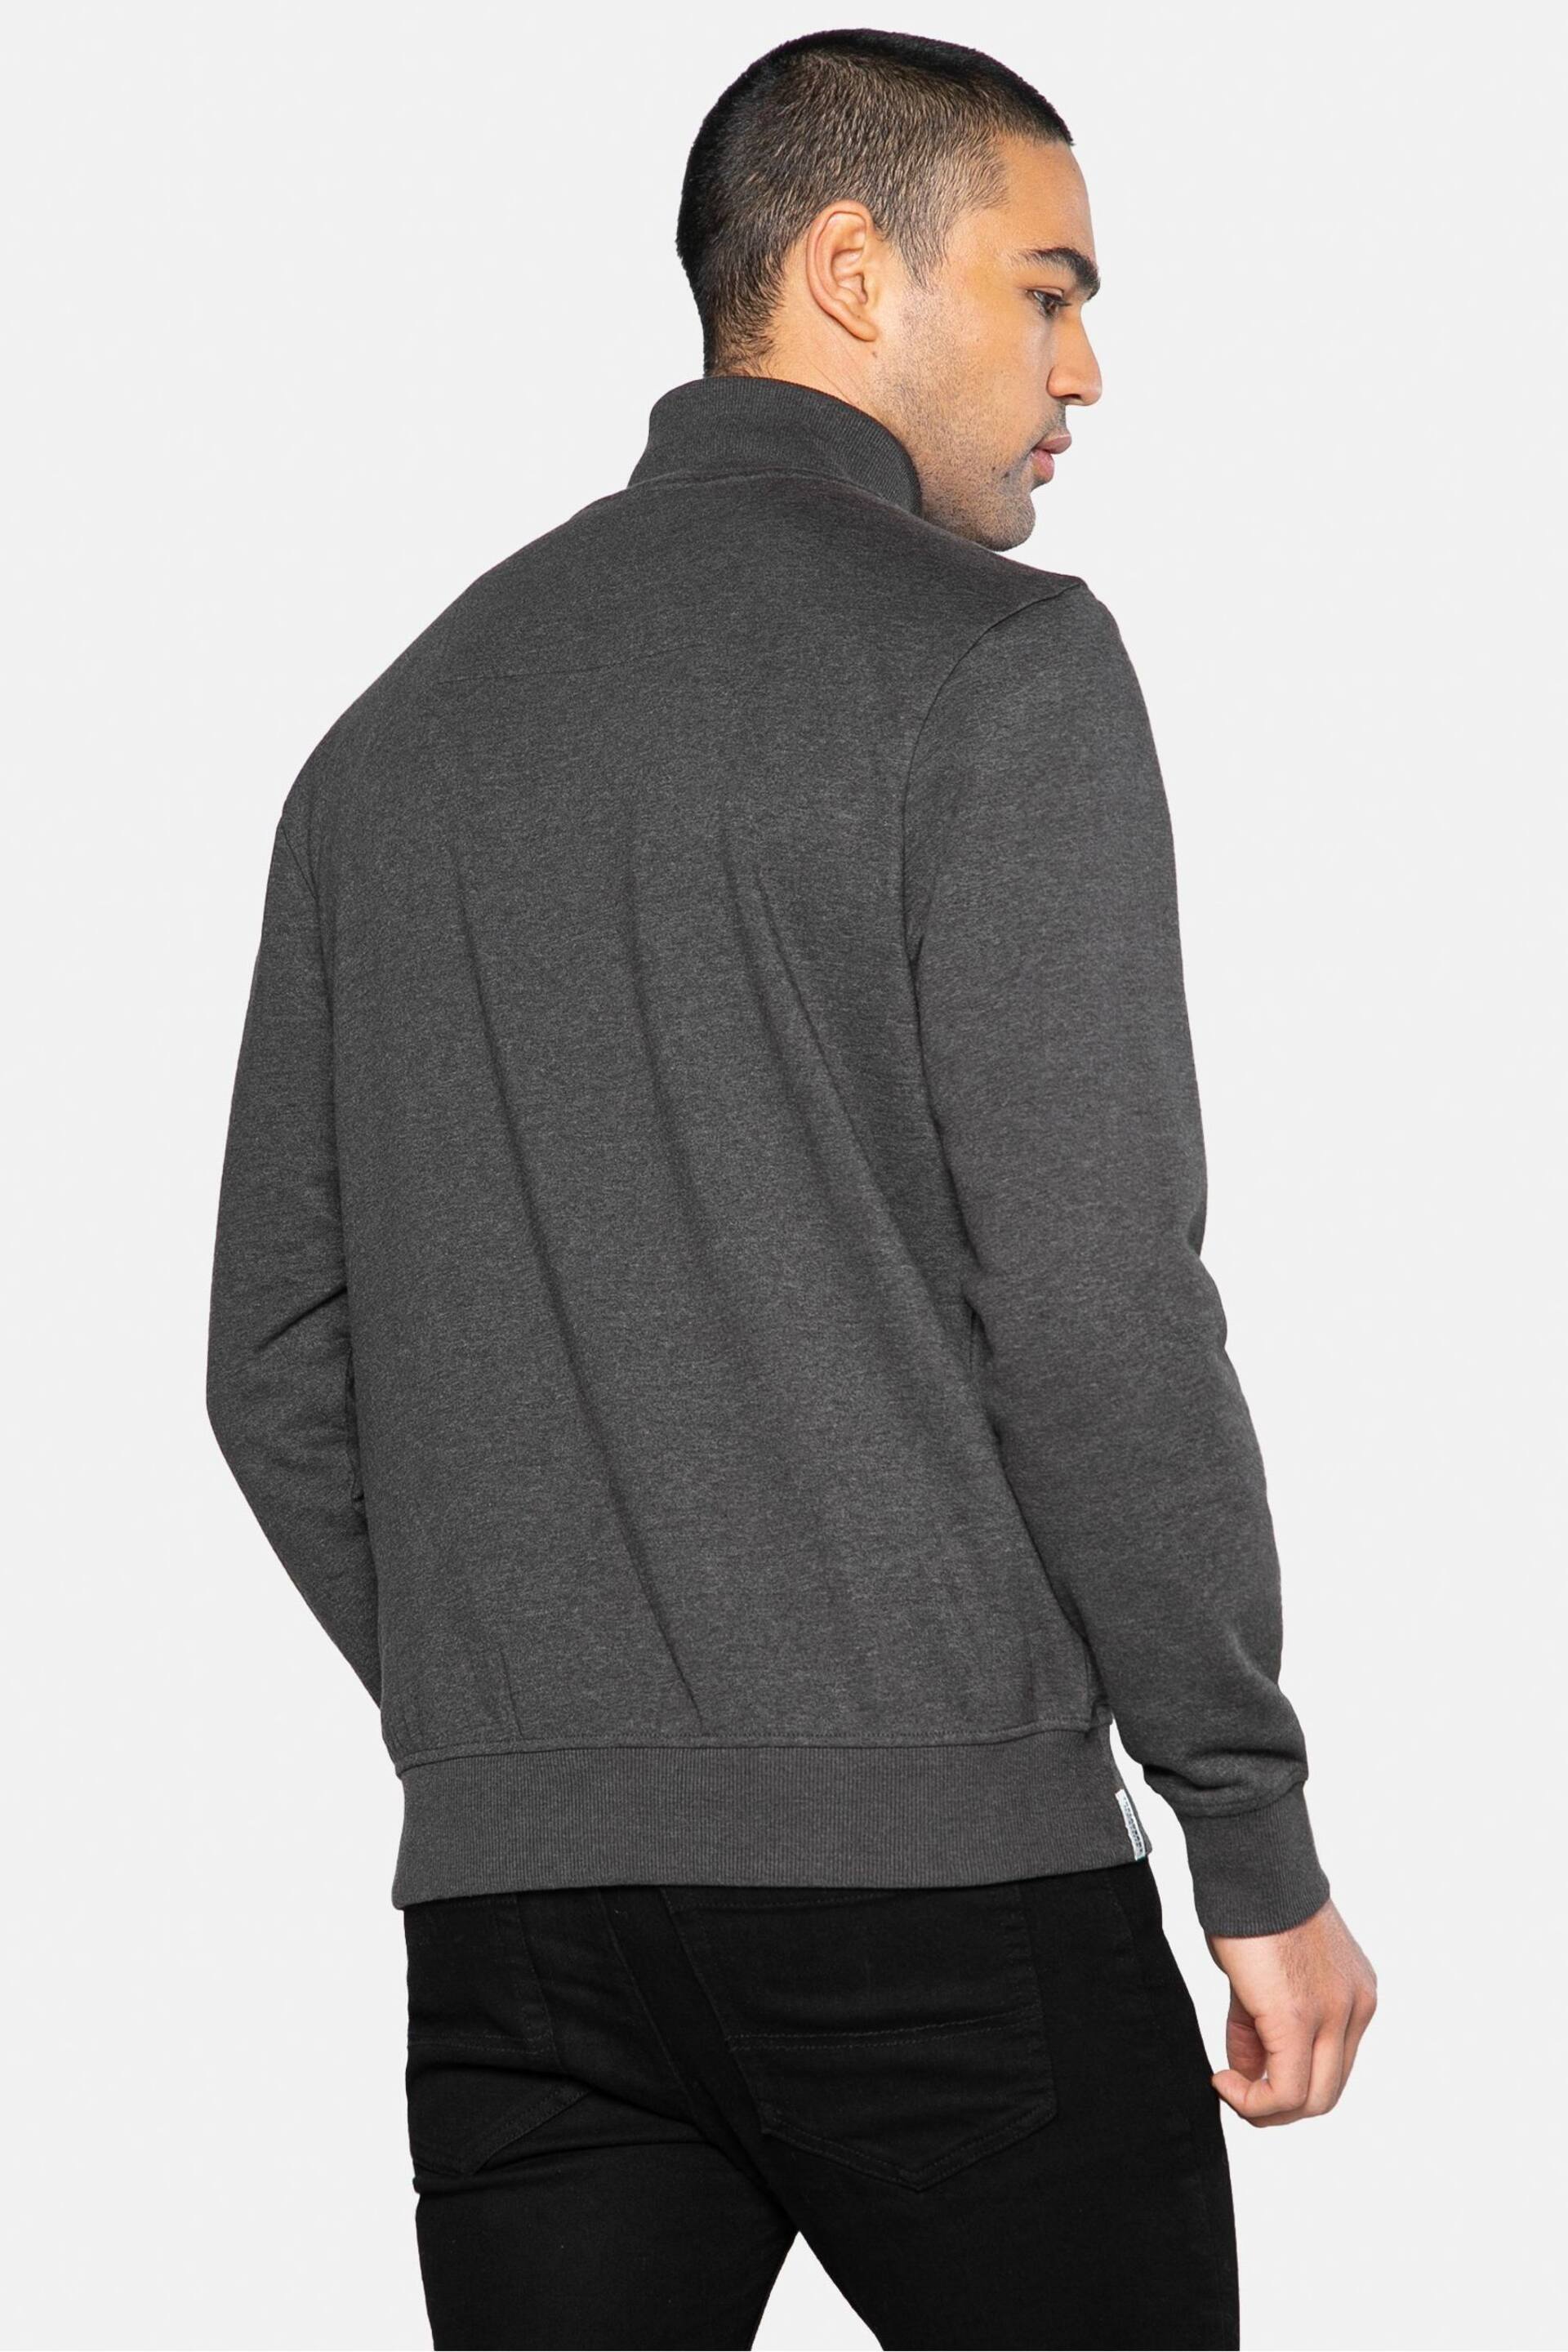 Threadbare Grey Zip Through Fleece Sweatshirt - Image 2 of 5